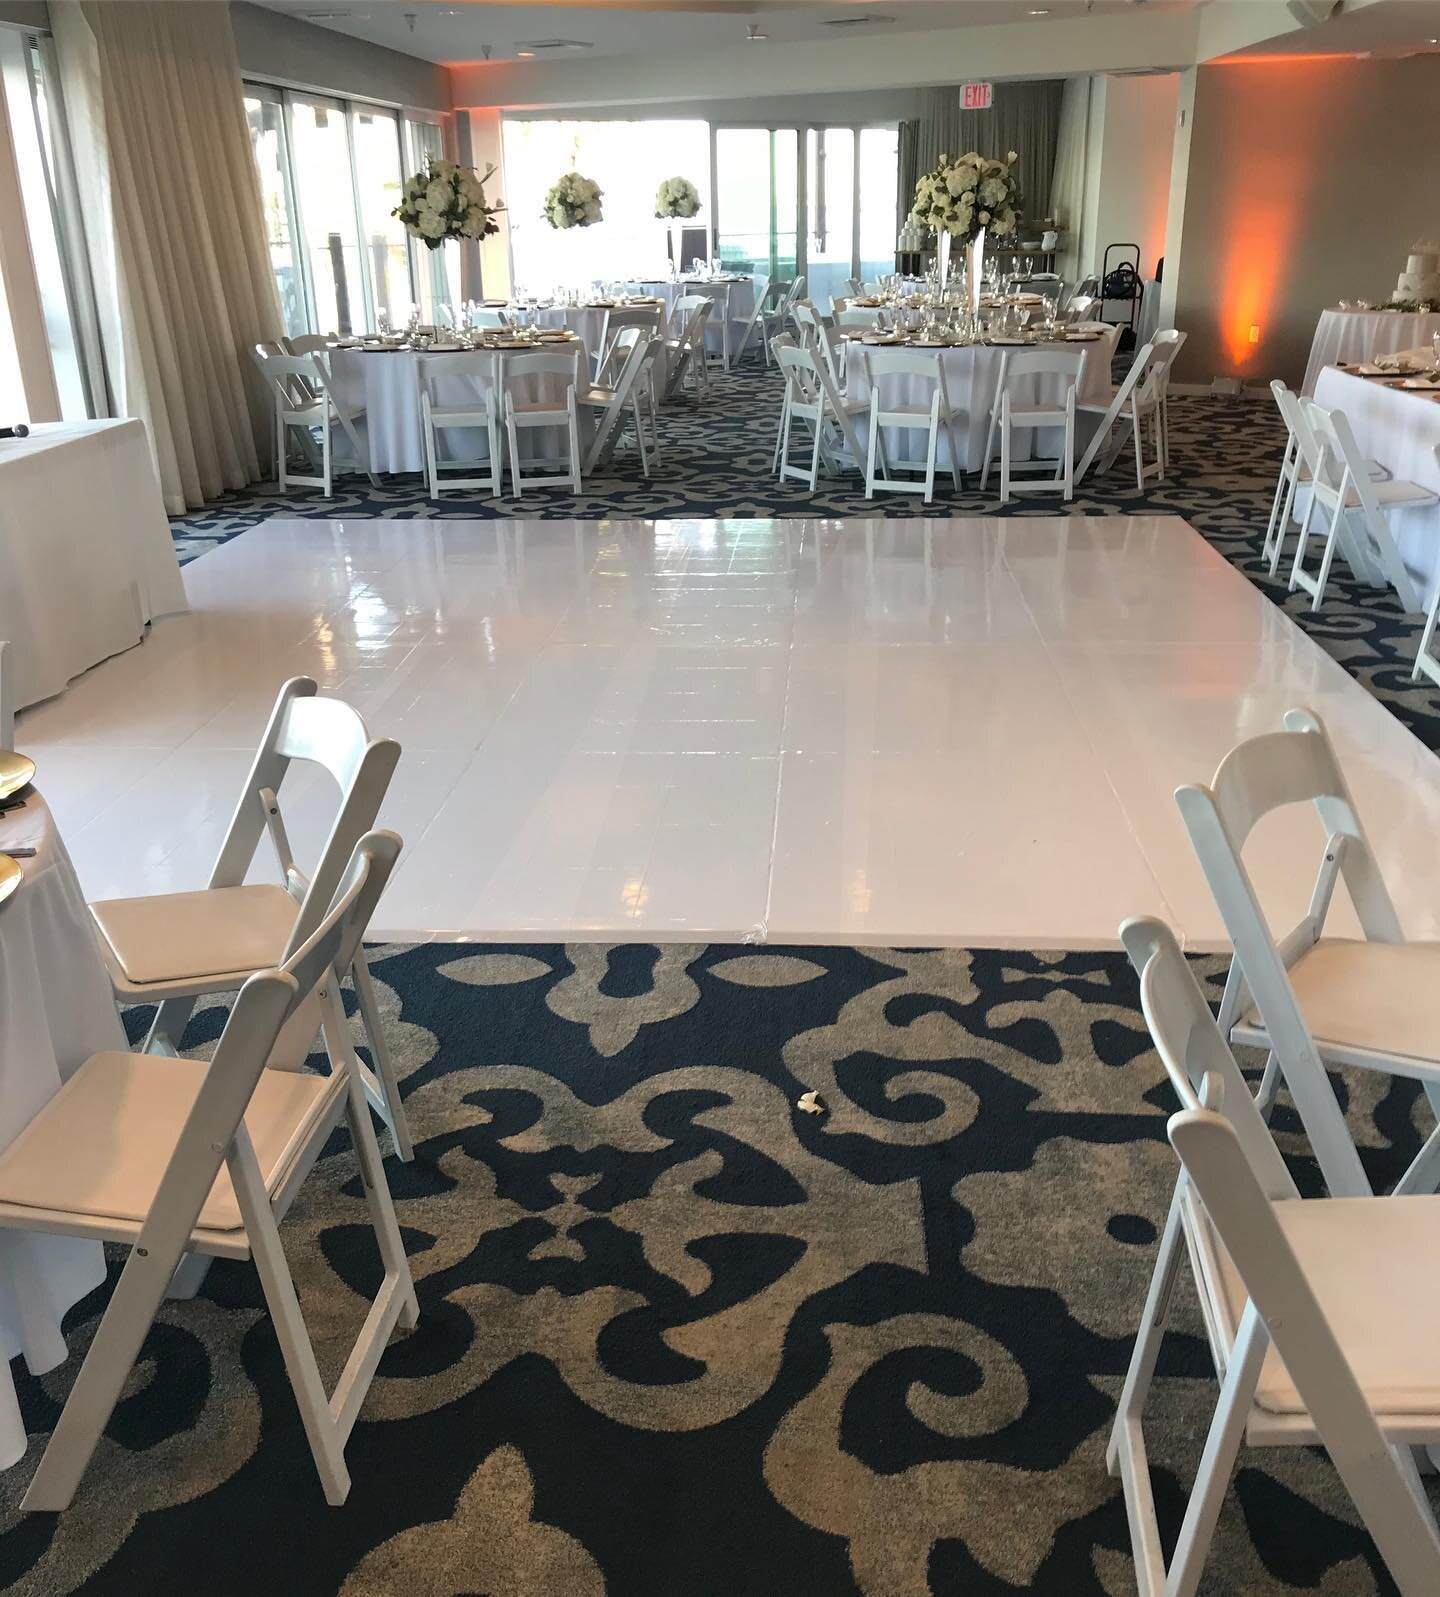 White dance floor now available! 📞 (310) 635-1723
💻www.iandopartyrentals.com
🏫 134 W. Gardena Blvd  Gardena, CA 90248

#dancefloor #partyrentals #losangeles #tables #chairs #canopy #party #dance #whitedancefloor #wedding #quincea&ntilde;era #speci